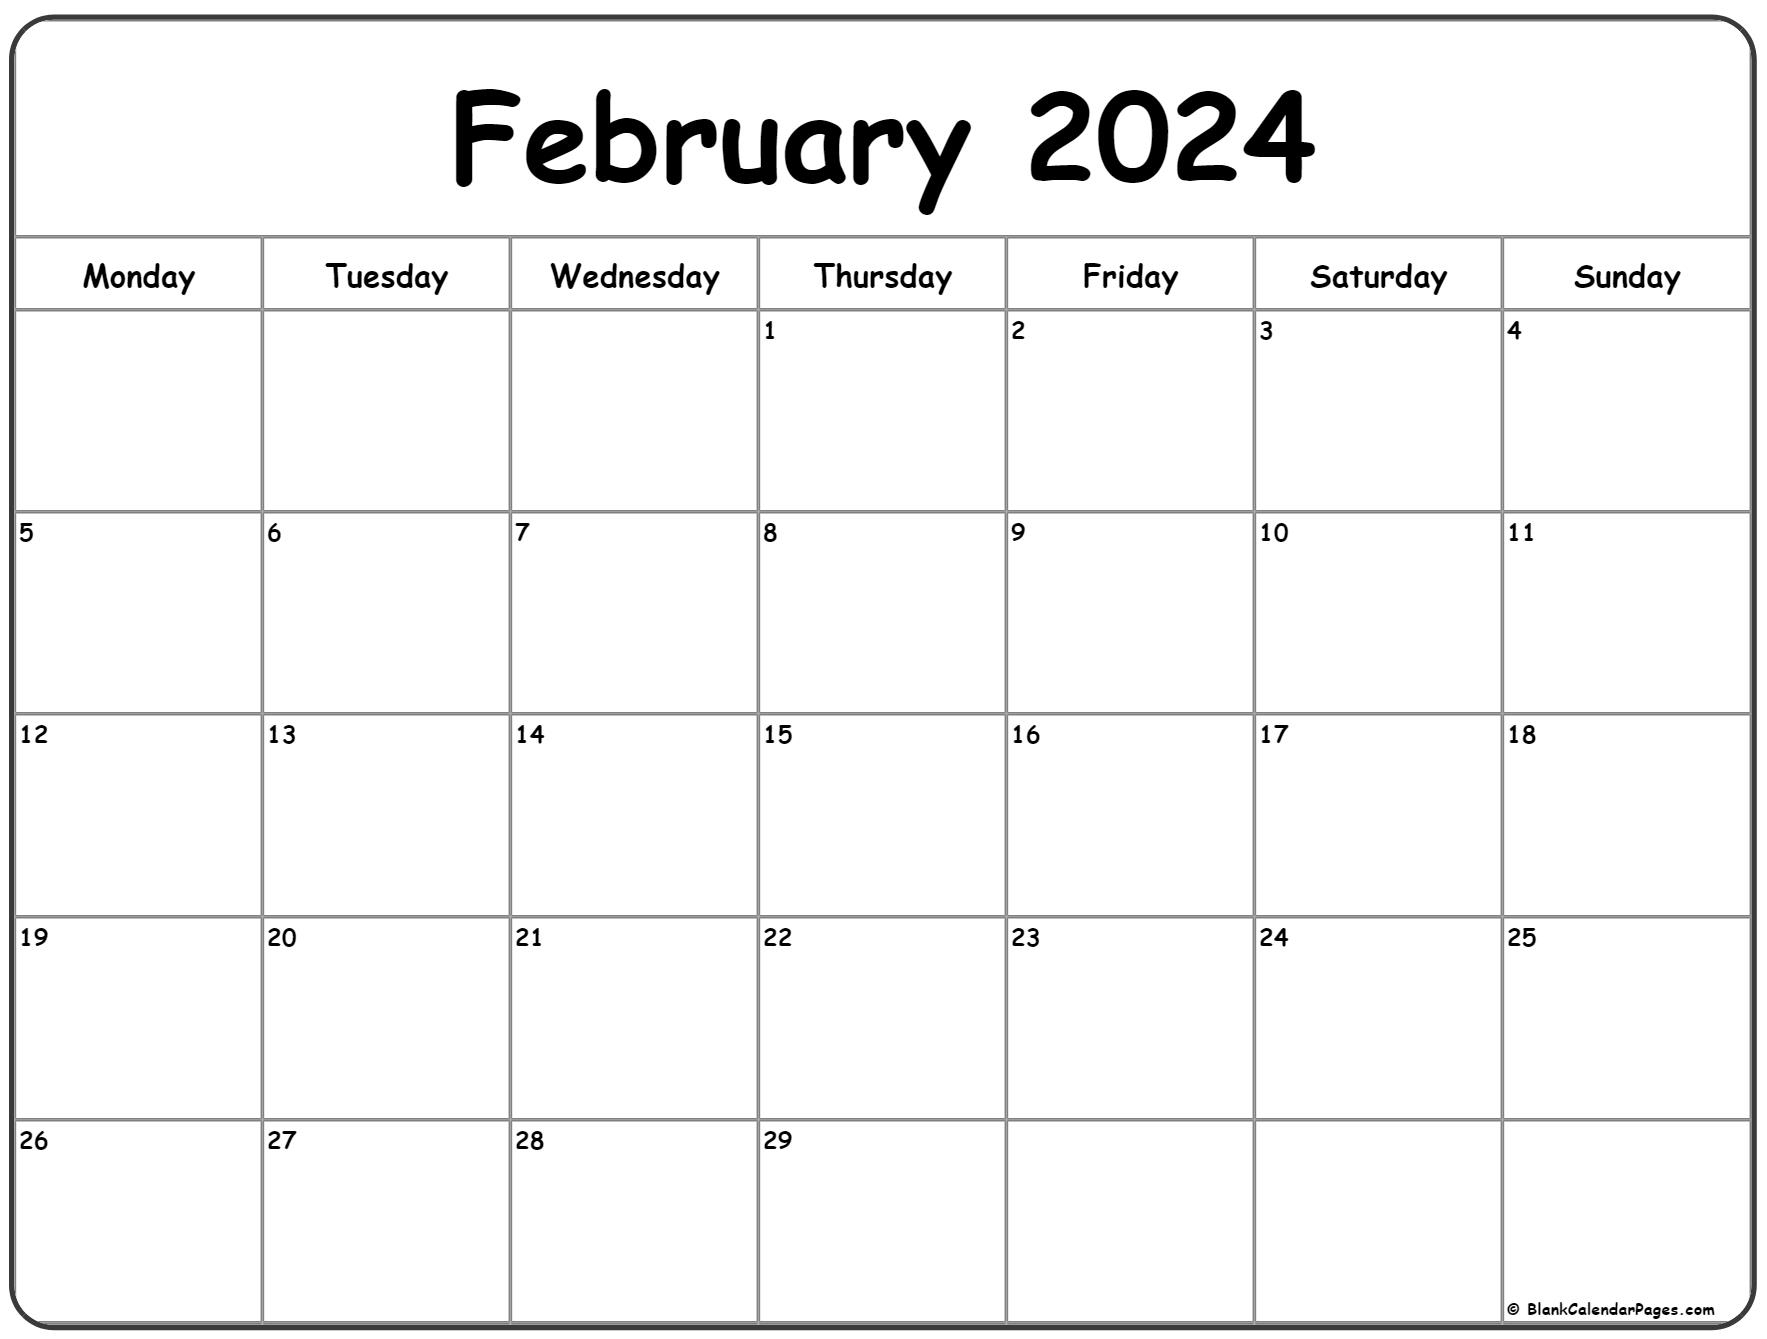 February 2024 Monday Calendar | Monday To Sunday for Printable Calendar 2024 Feb